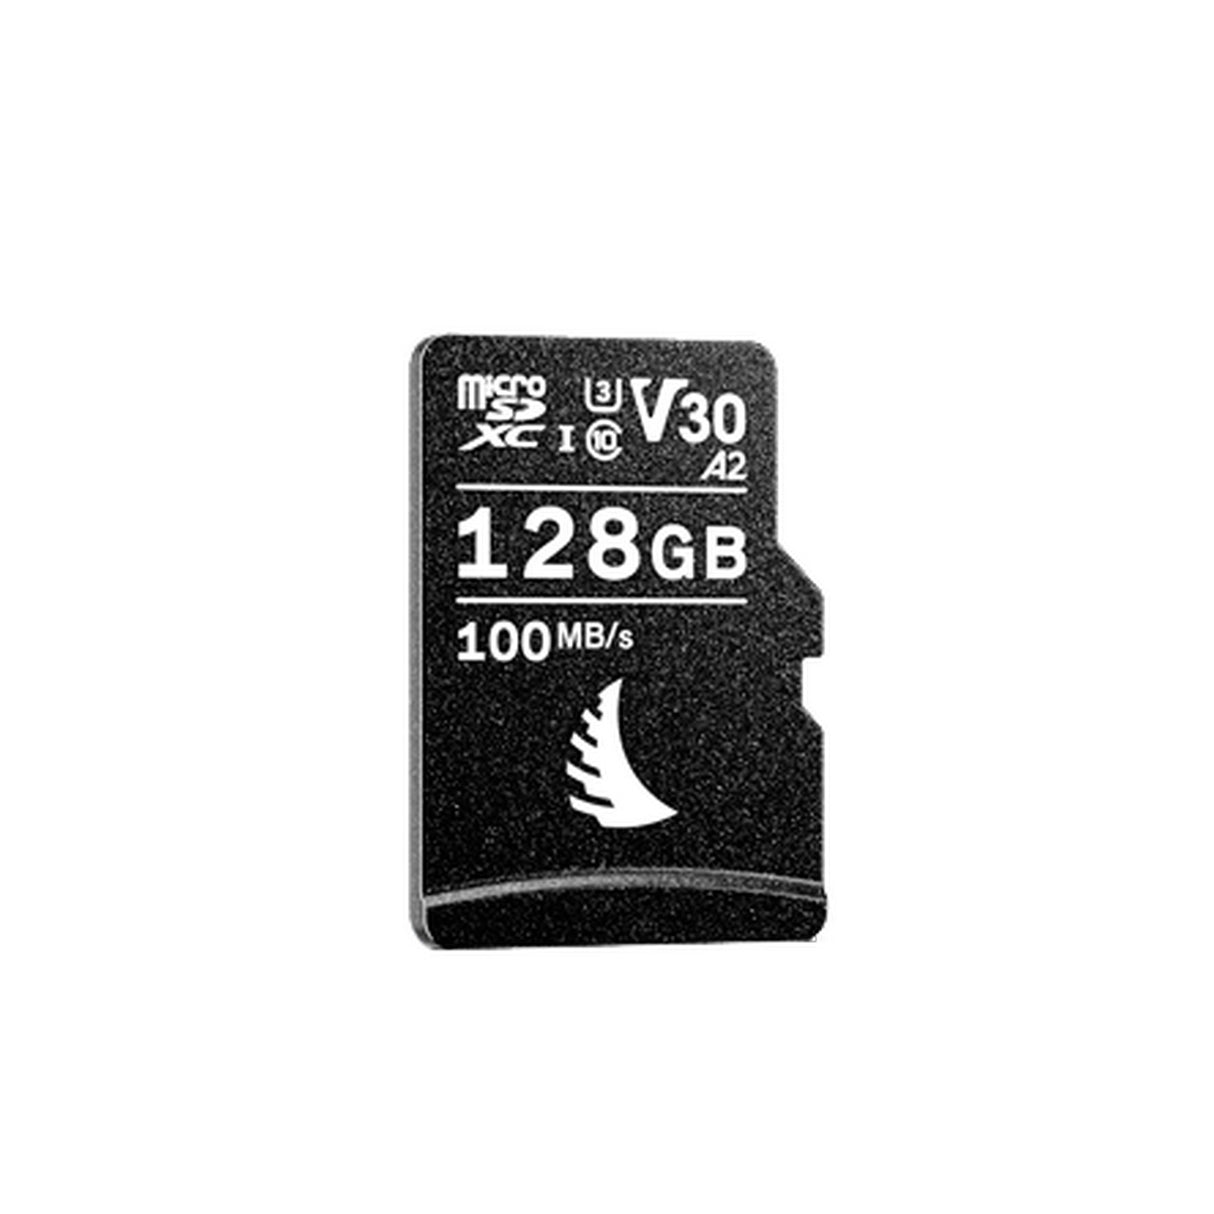 Angelbird AV PRO microSD V30 UHS-I Card, 128GB